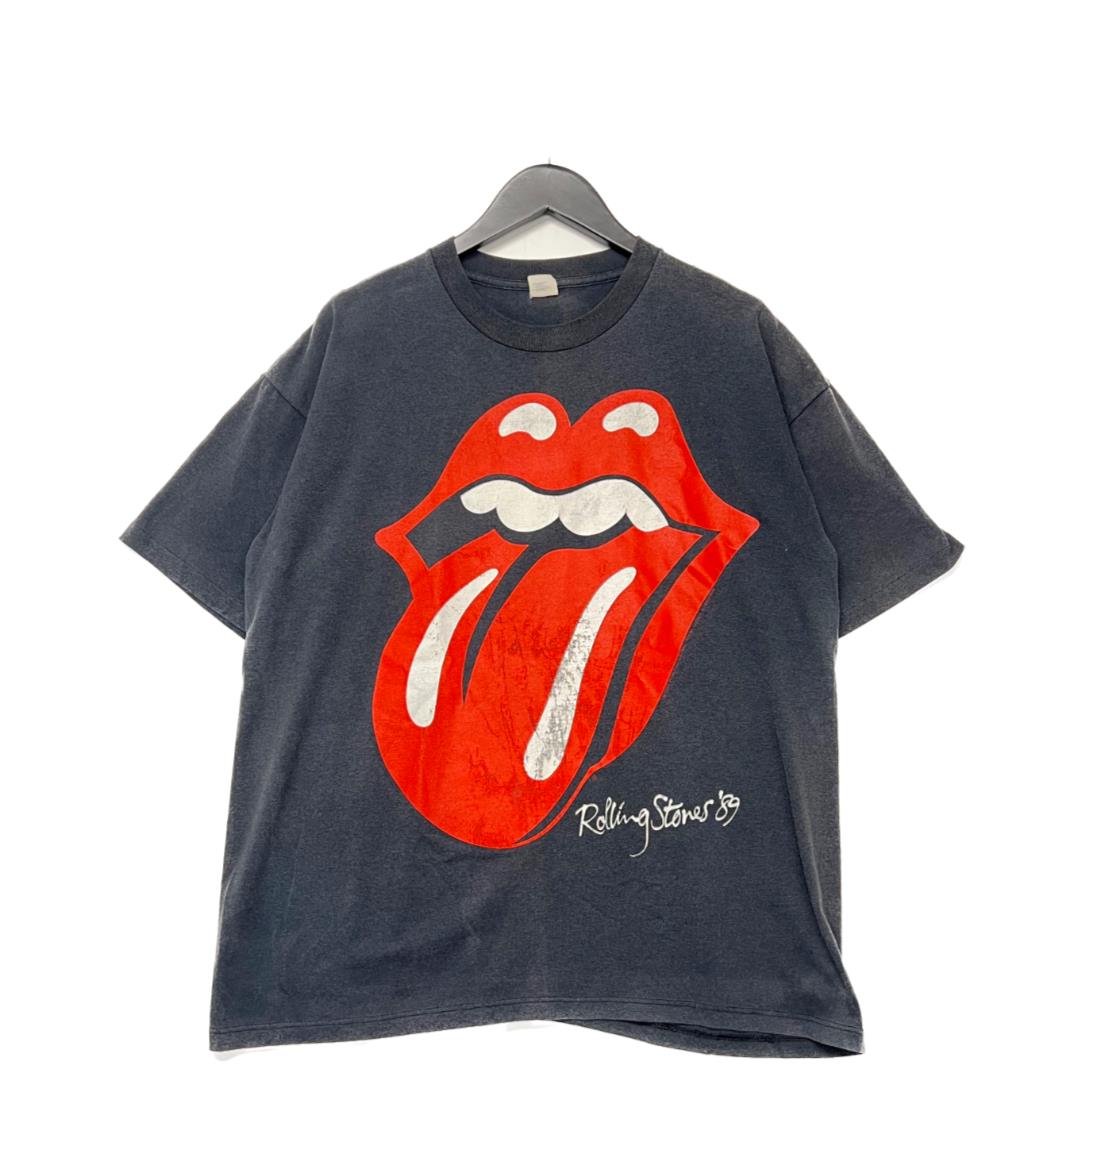 Rolling Stones T-shirt Size XL